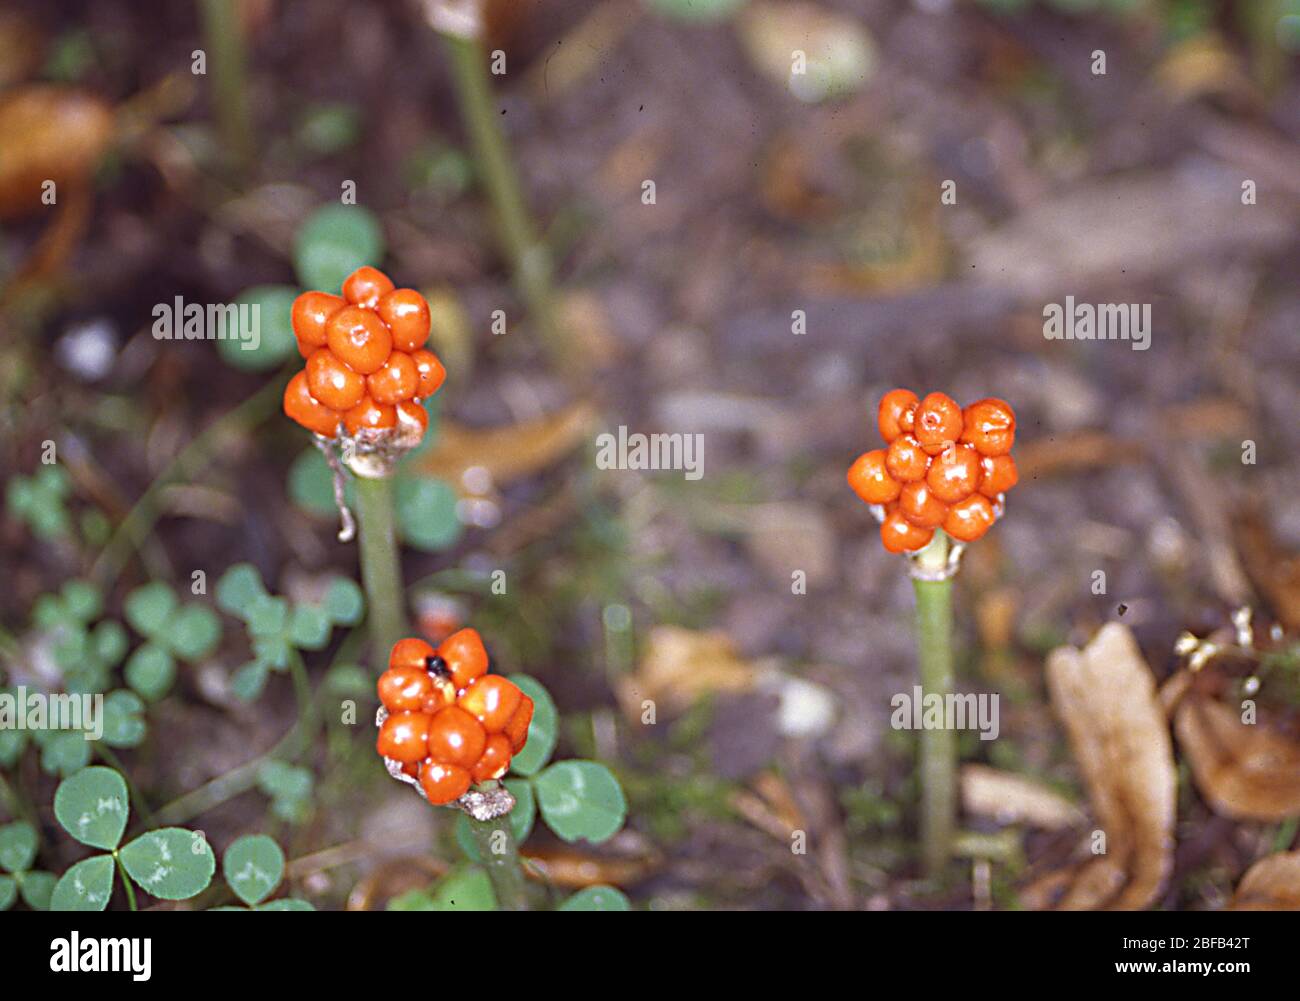 Arum with orange berries Stock Photo